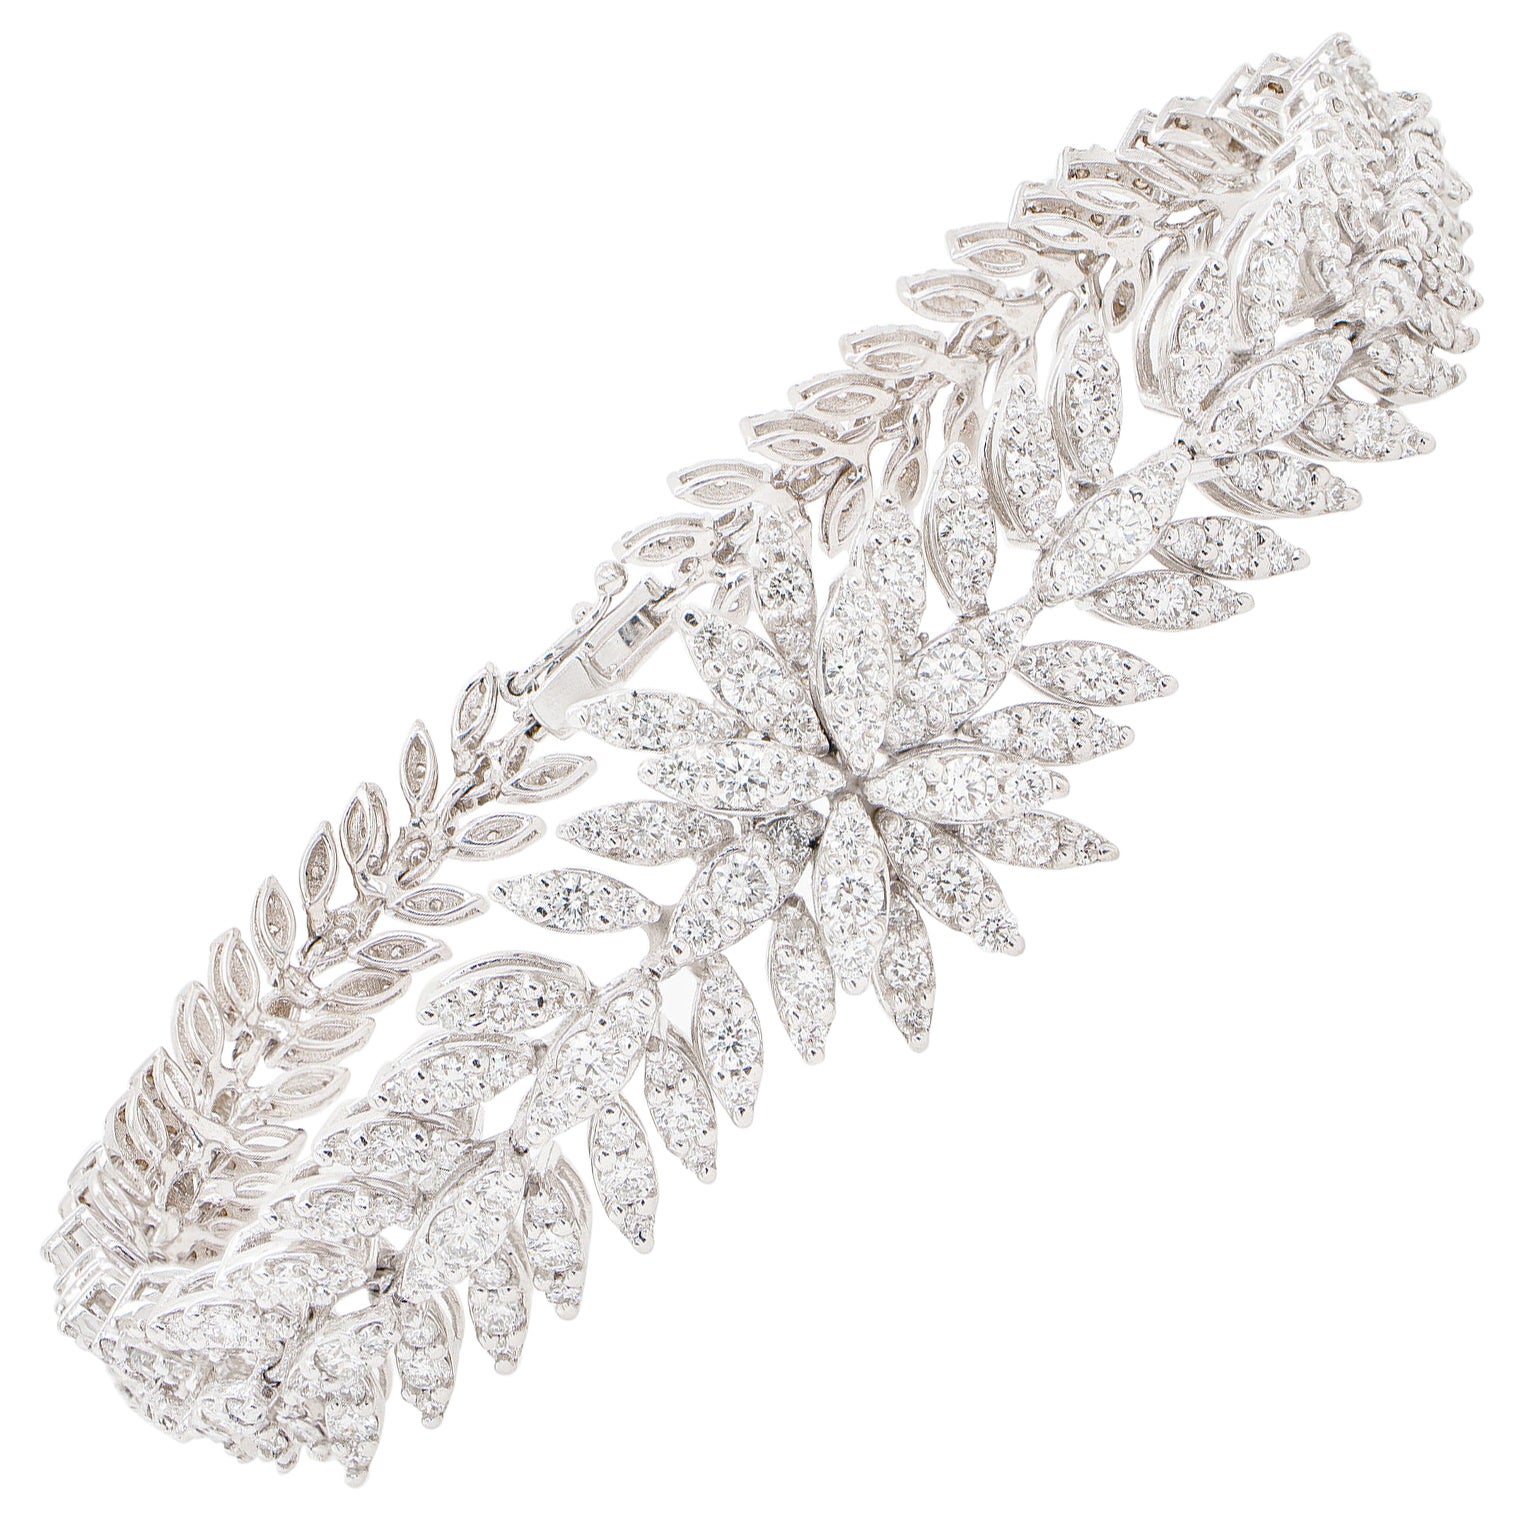 Sophisticated Diamond Bracelet 5.29 Carats Total 18K White Gold